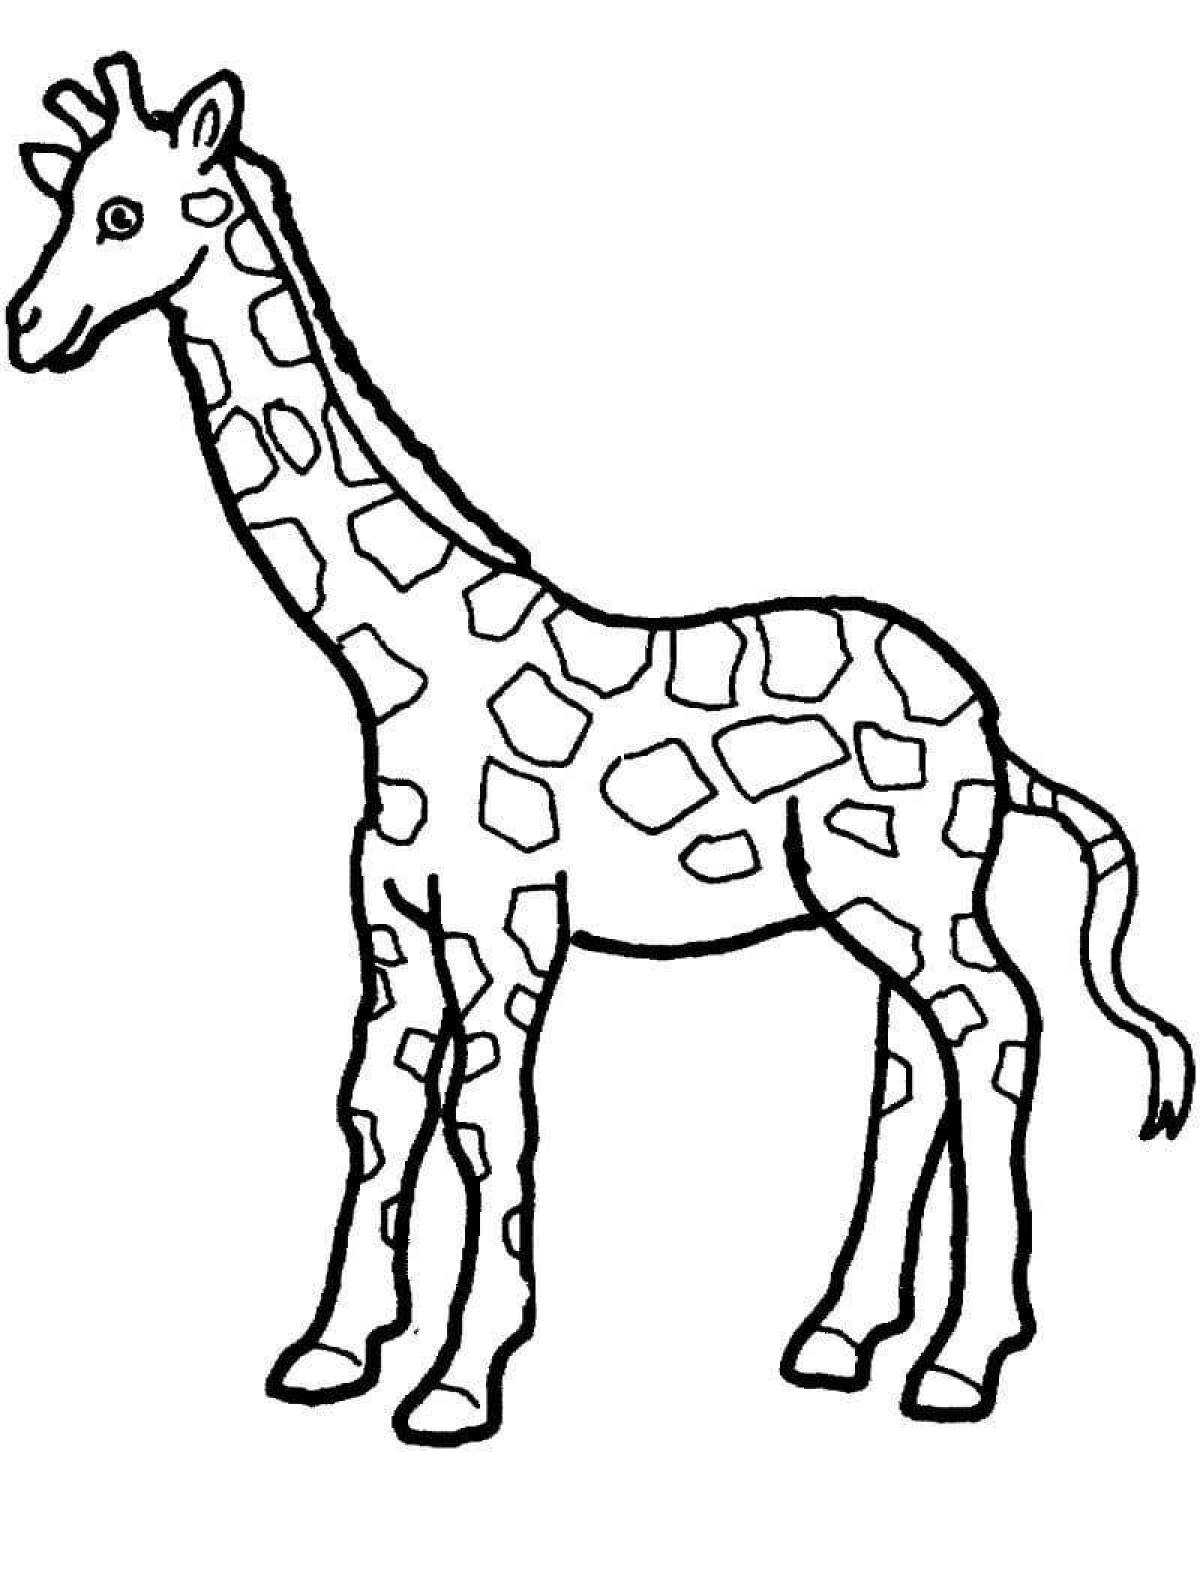 Wonderful coloring giraffe for children 3-4 years